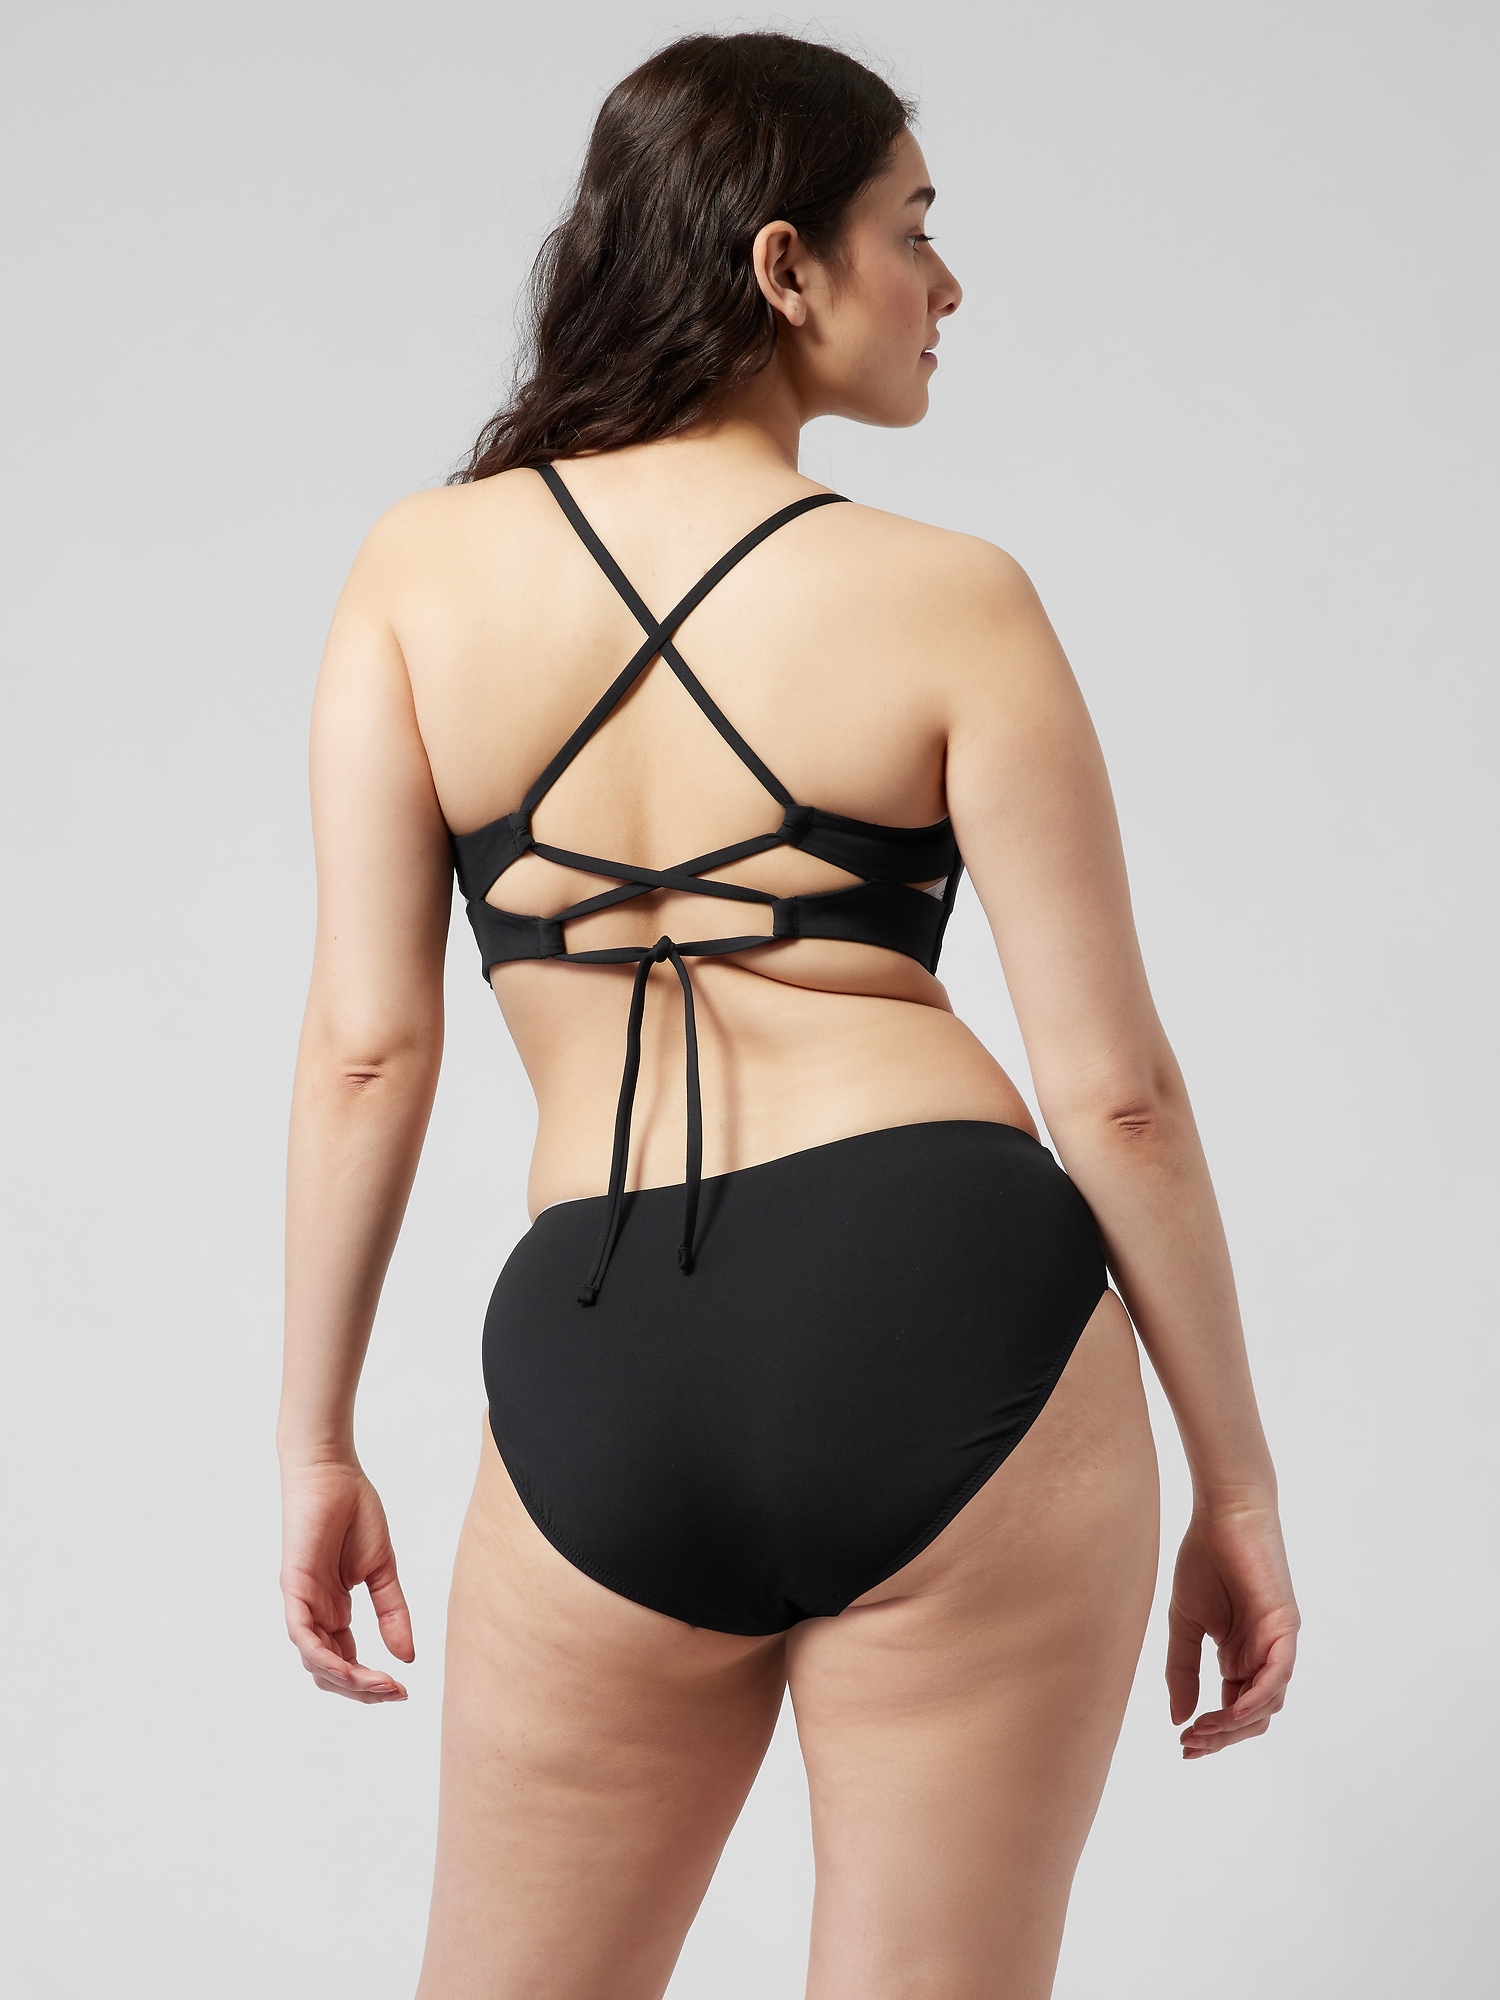 D Cup Bikini Tops for Women  Shop Supportive Designer Swimwear Online